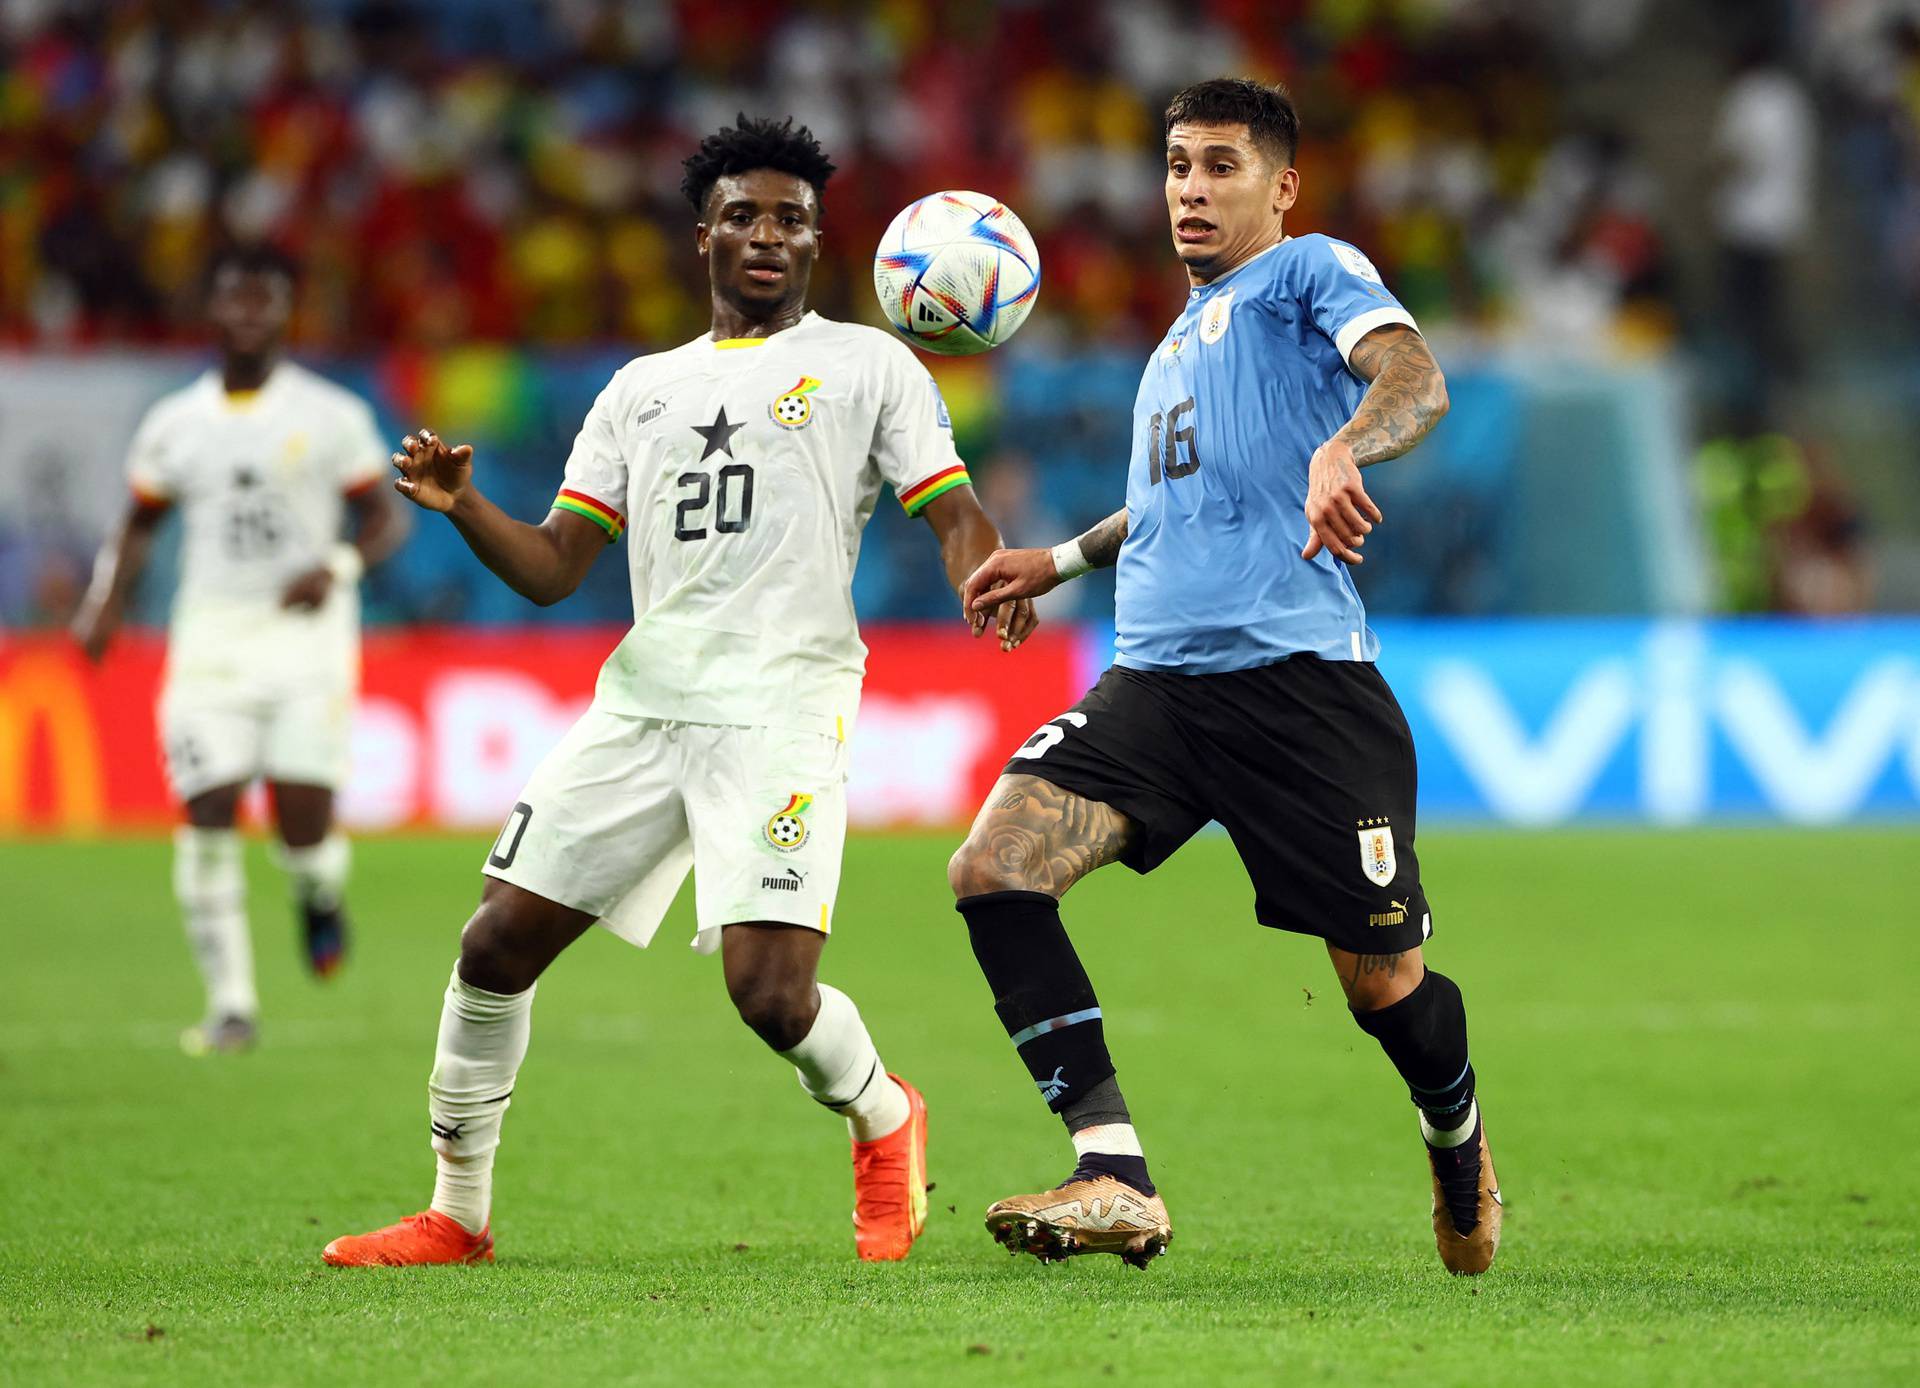 FIFA World Cup Qatar 2022 - Group H - Ghana v Uruguay